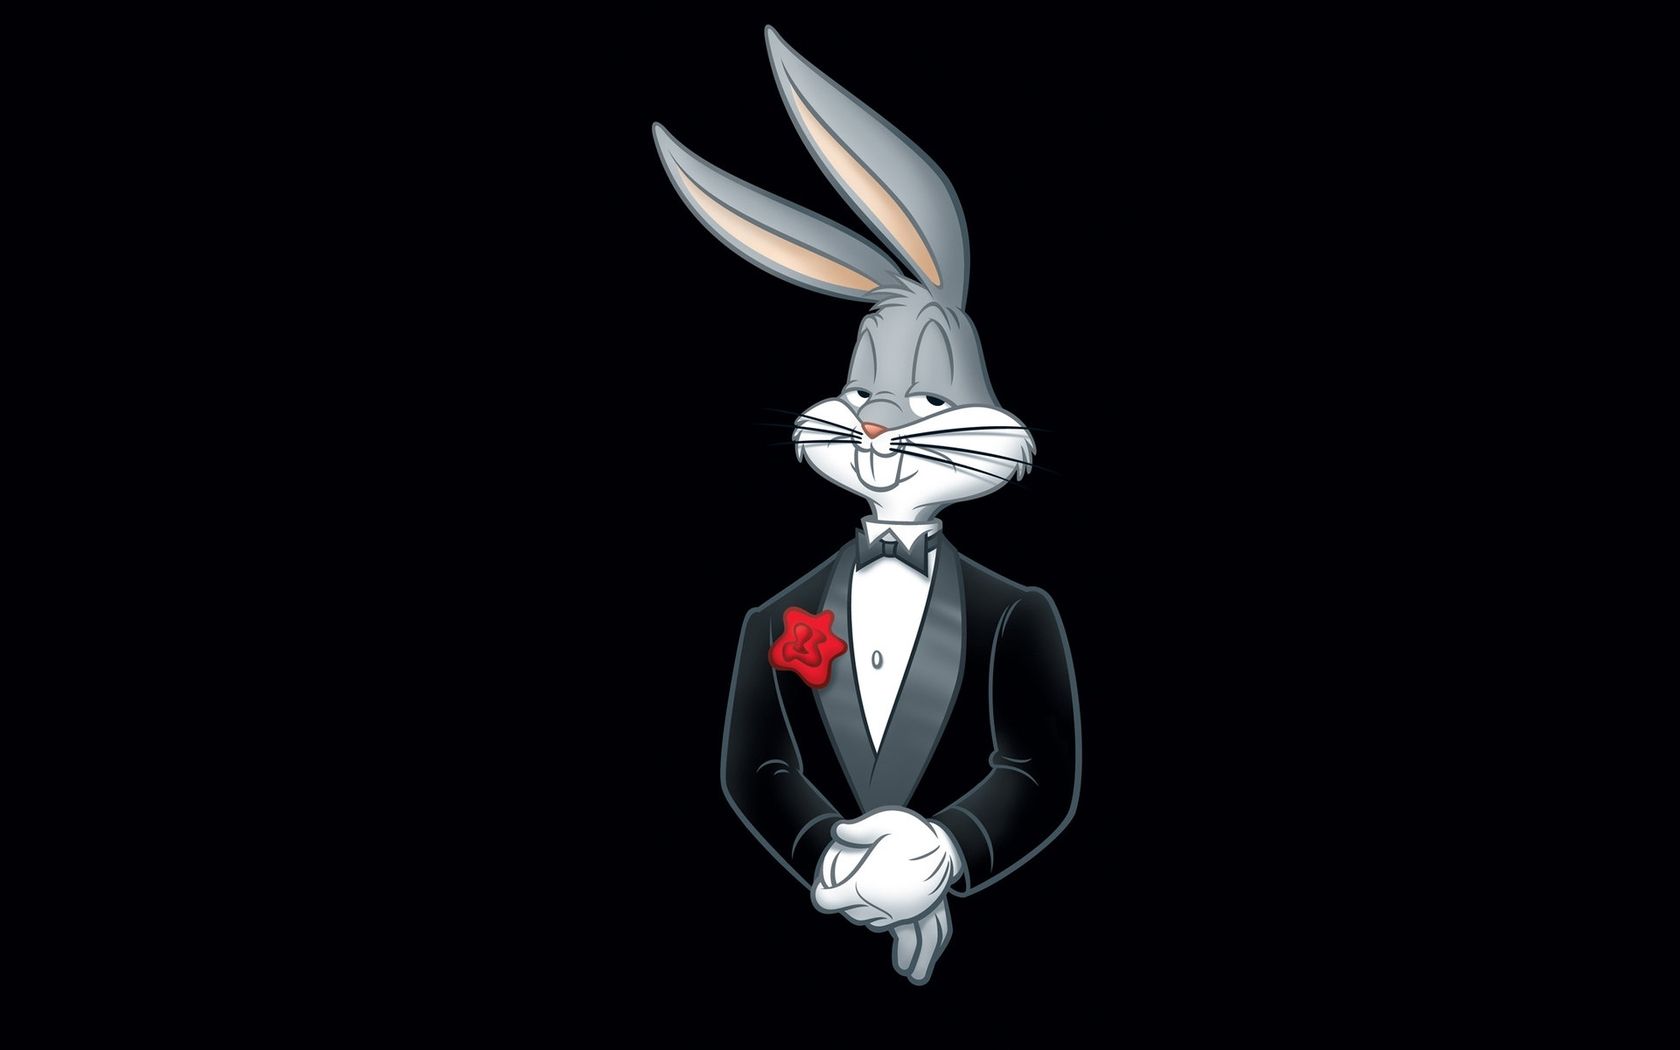 Bugs Bunny Wallpaper | Ultimate-wallpapers